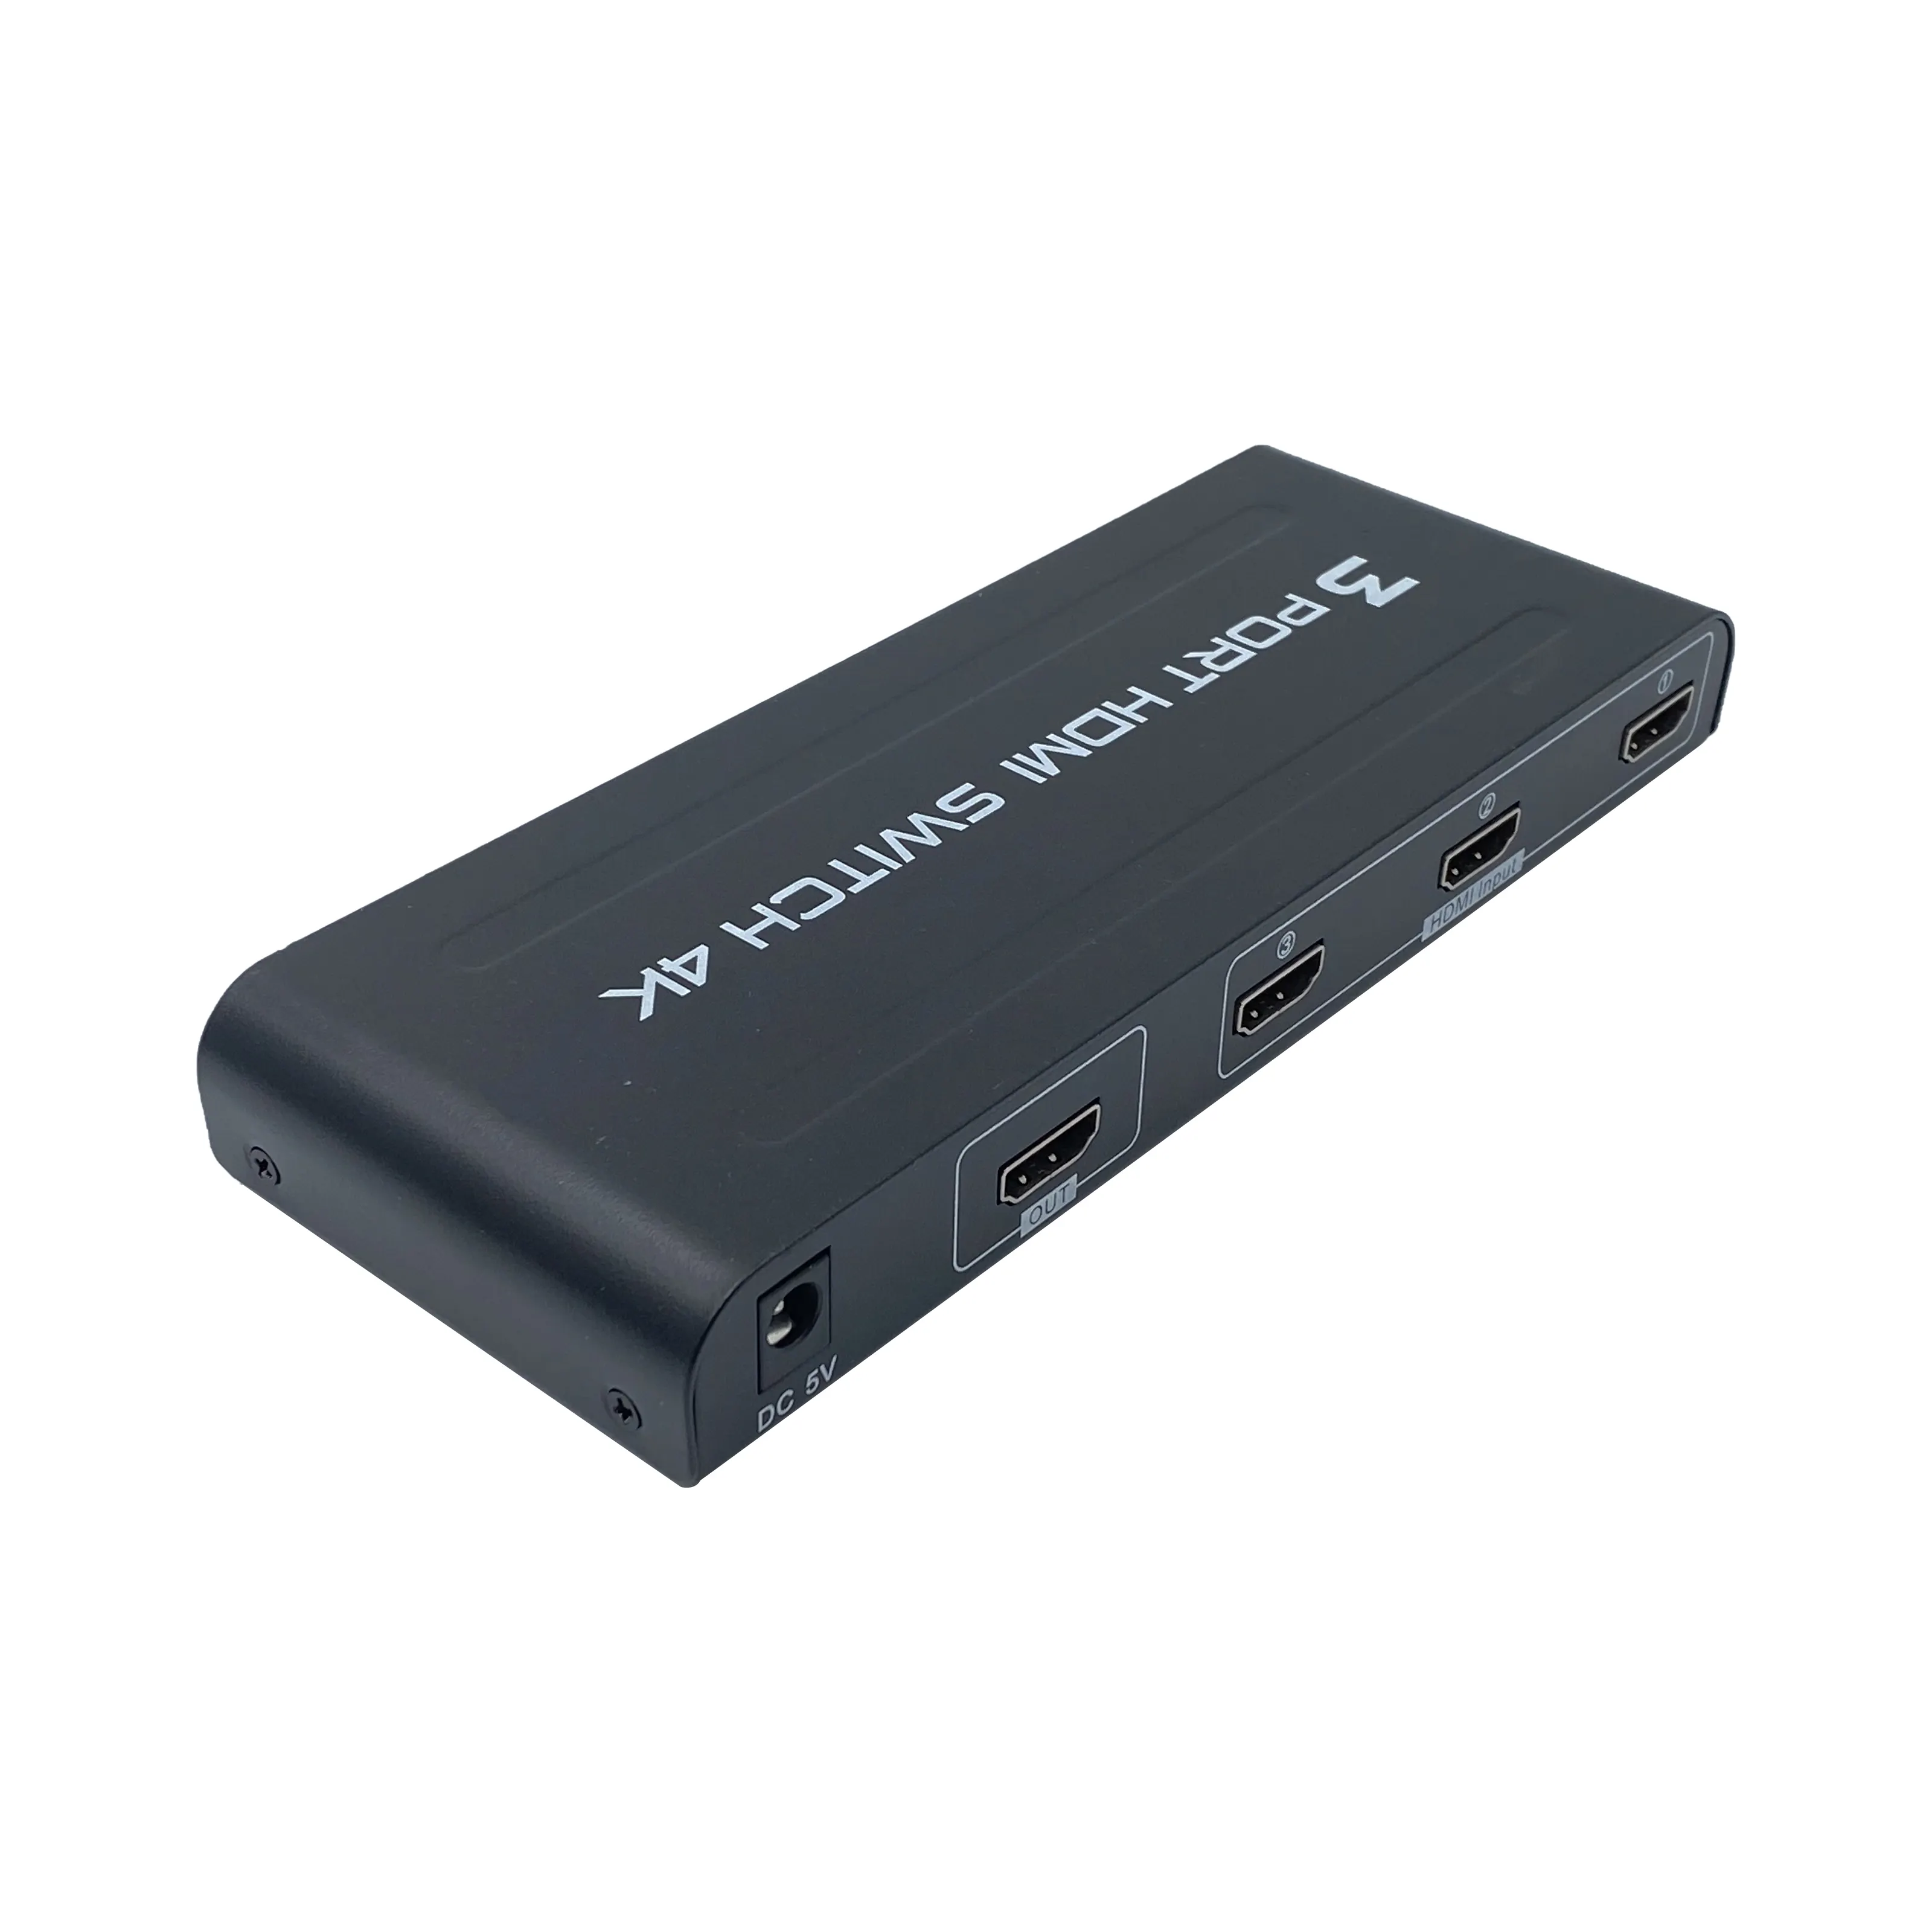 Switch Box 3x1 Port 4K HDMI 1.4 Black PVC Carton Box Aoc Monitor Stock 3 in 1 OUT 4K HDMI SWITCH Nickel Plated